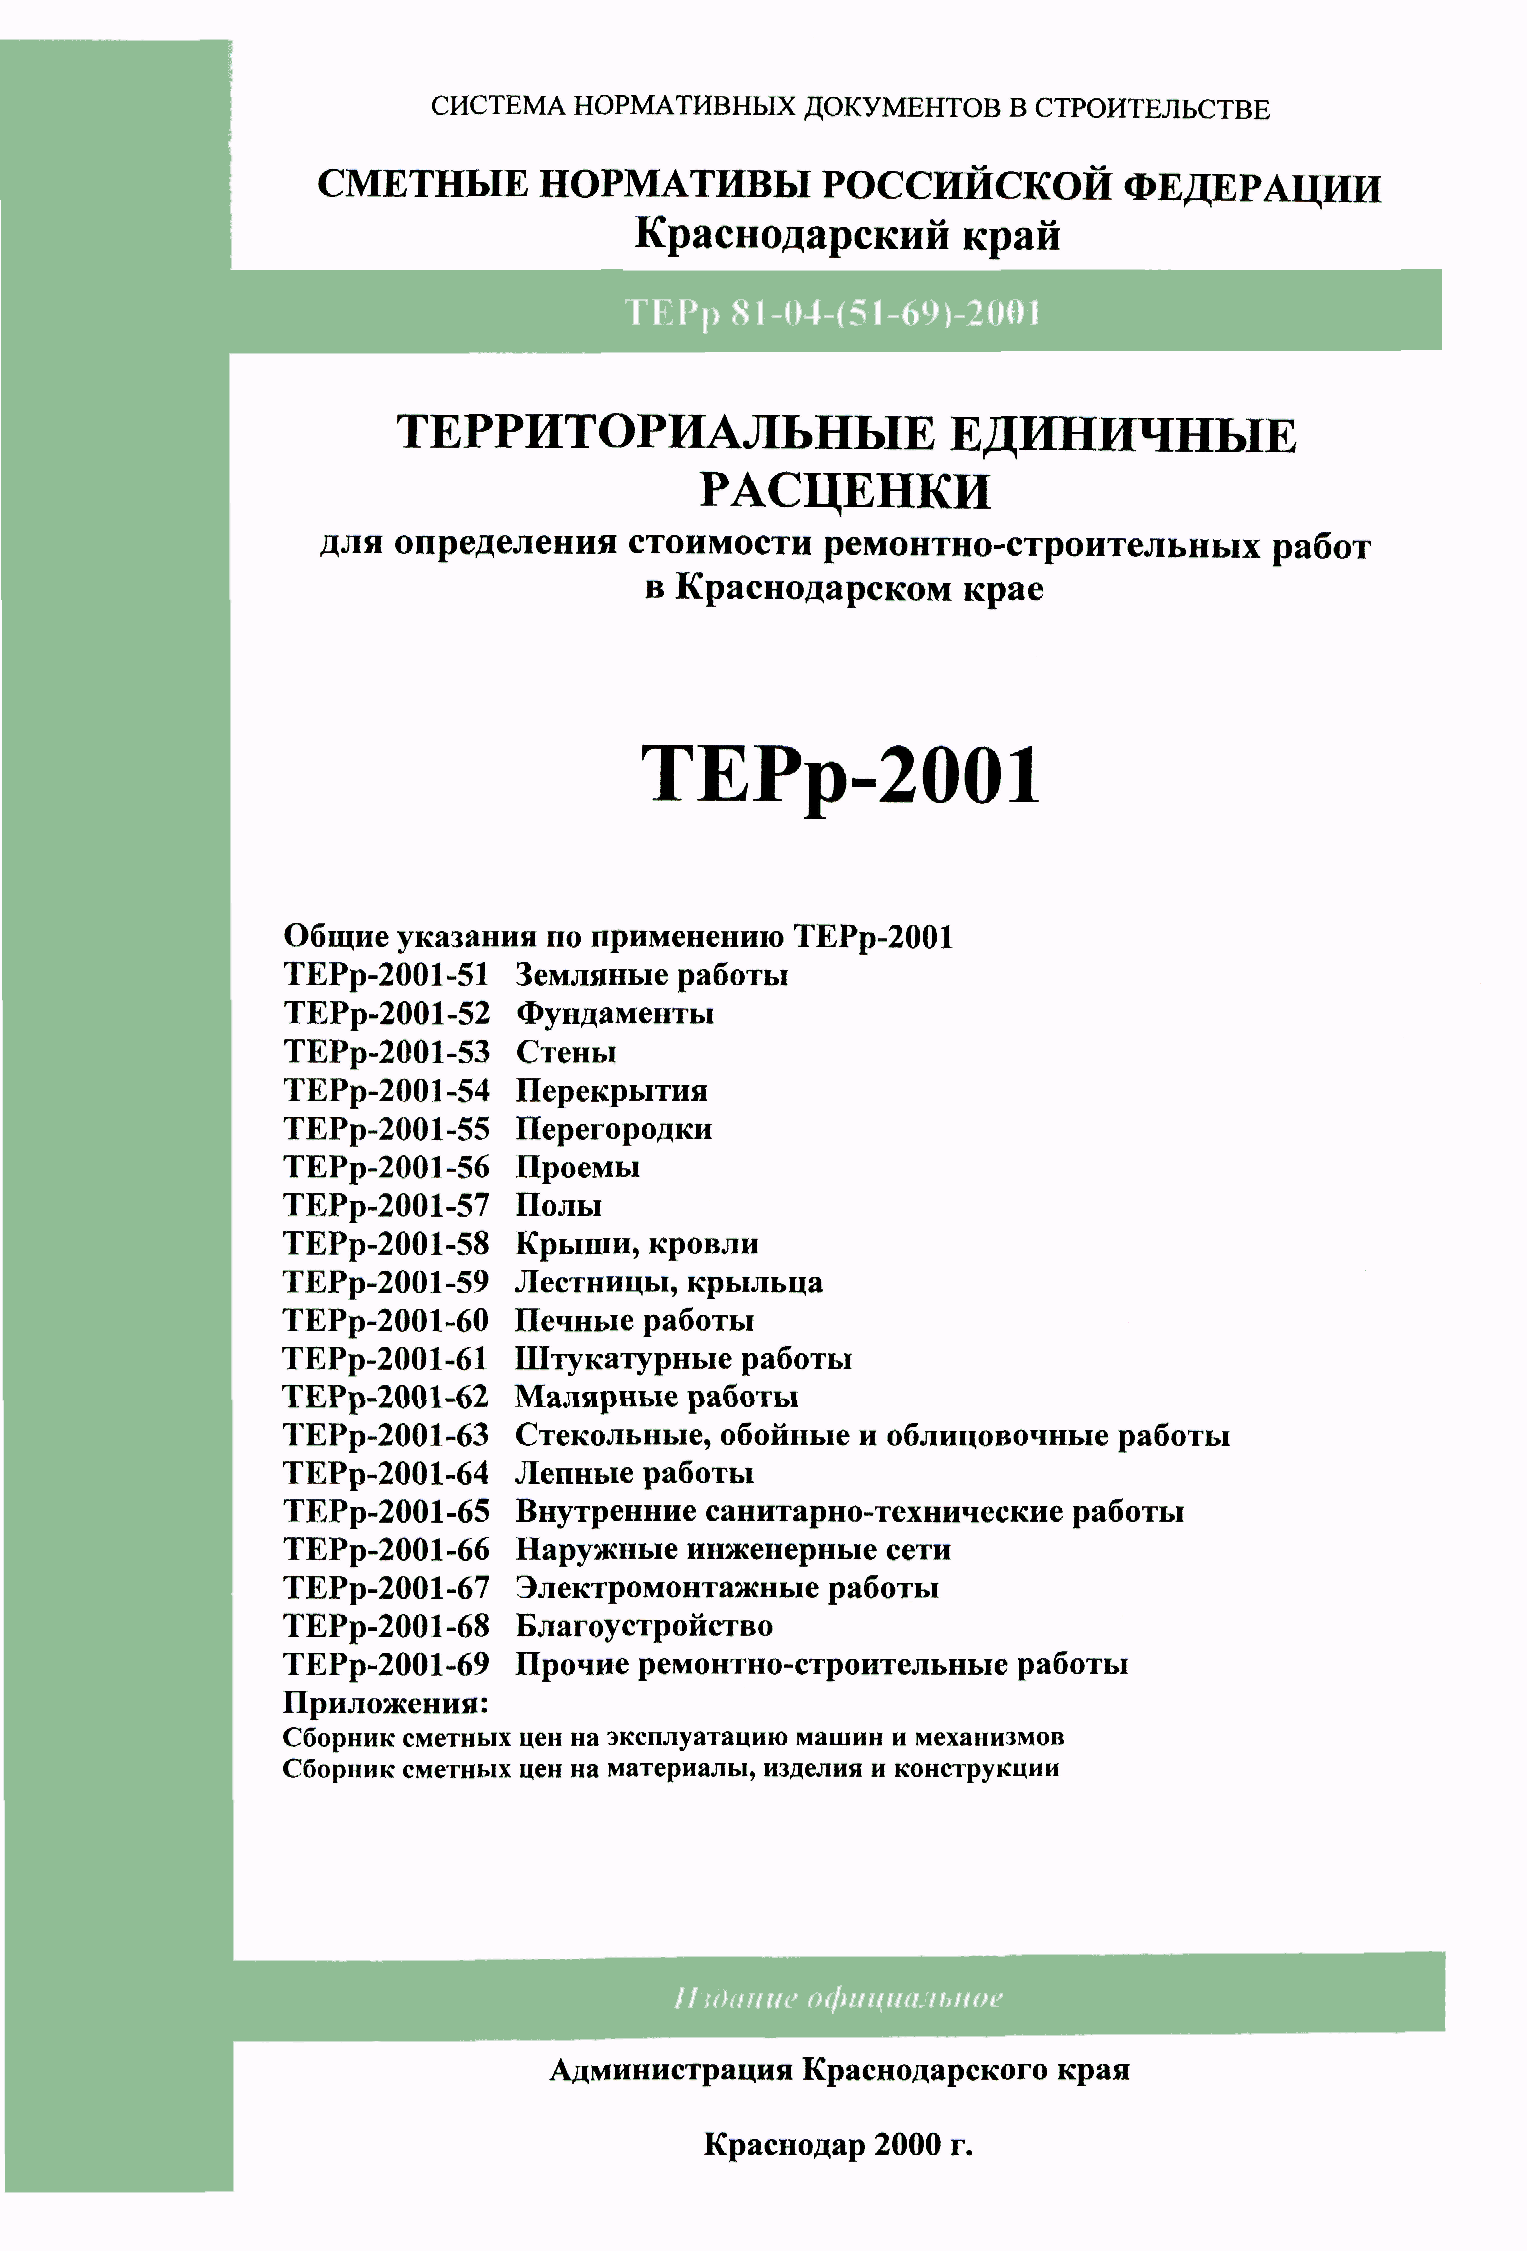 ТЕРр Краснодарский край 2001-69